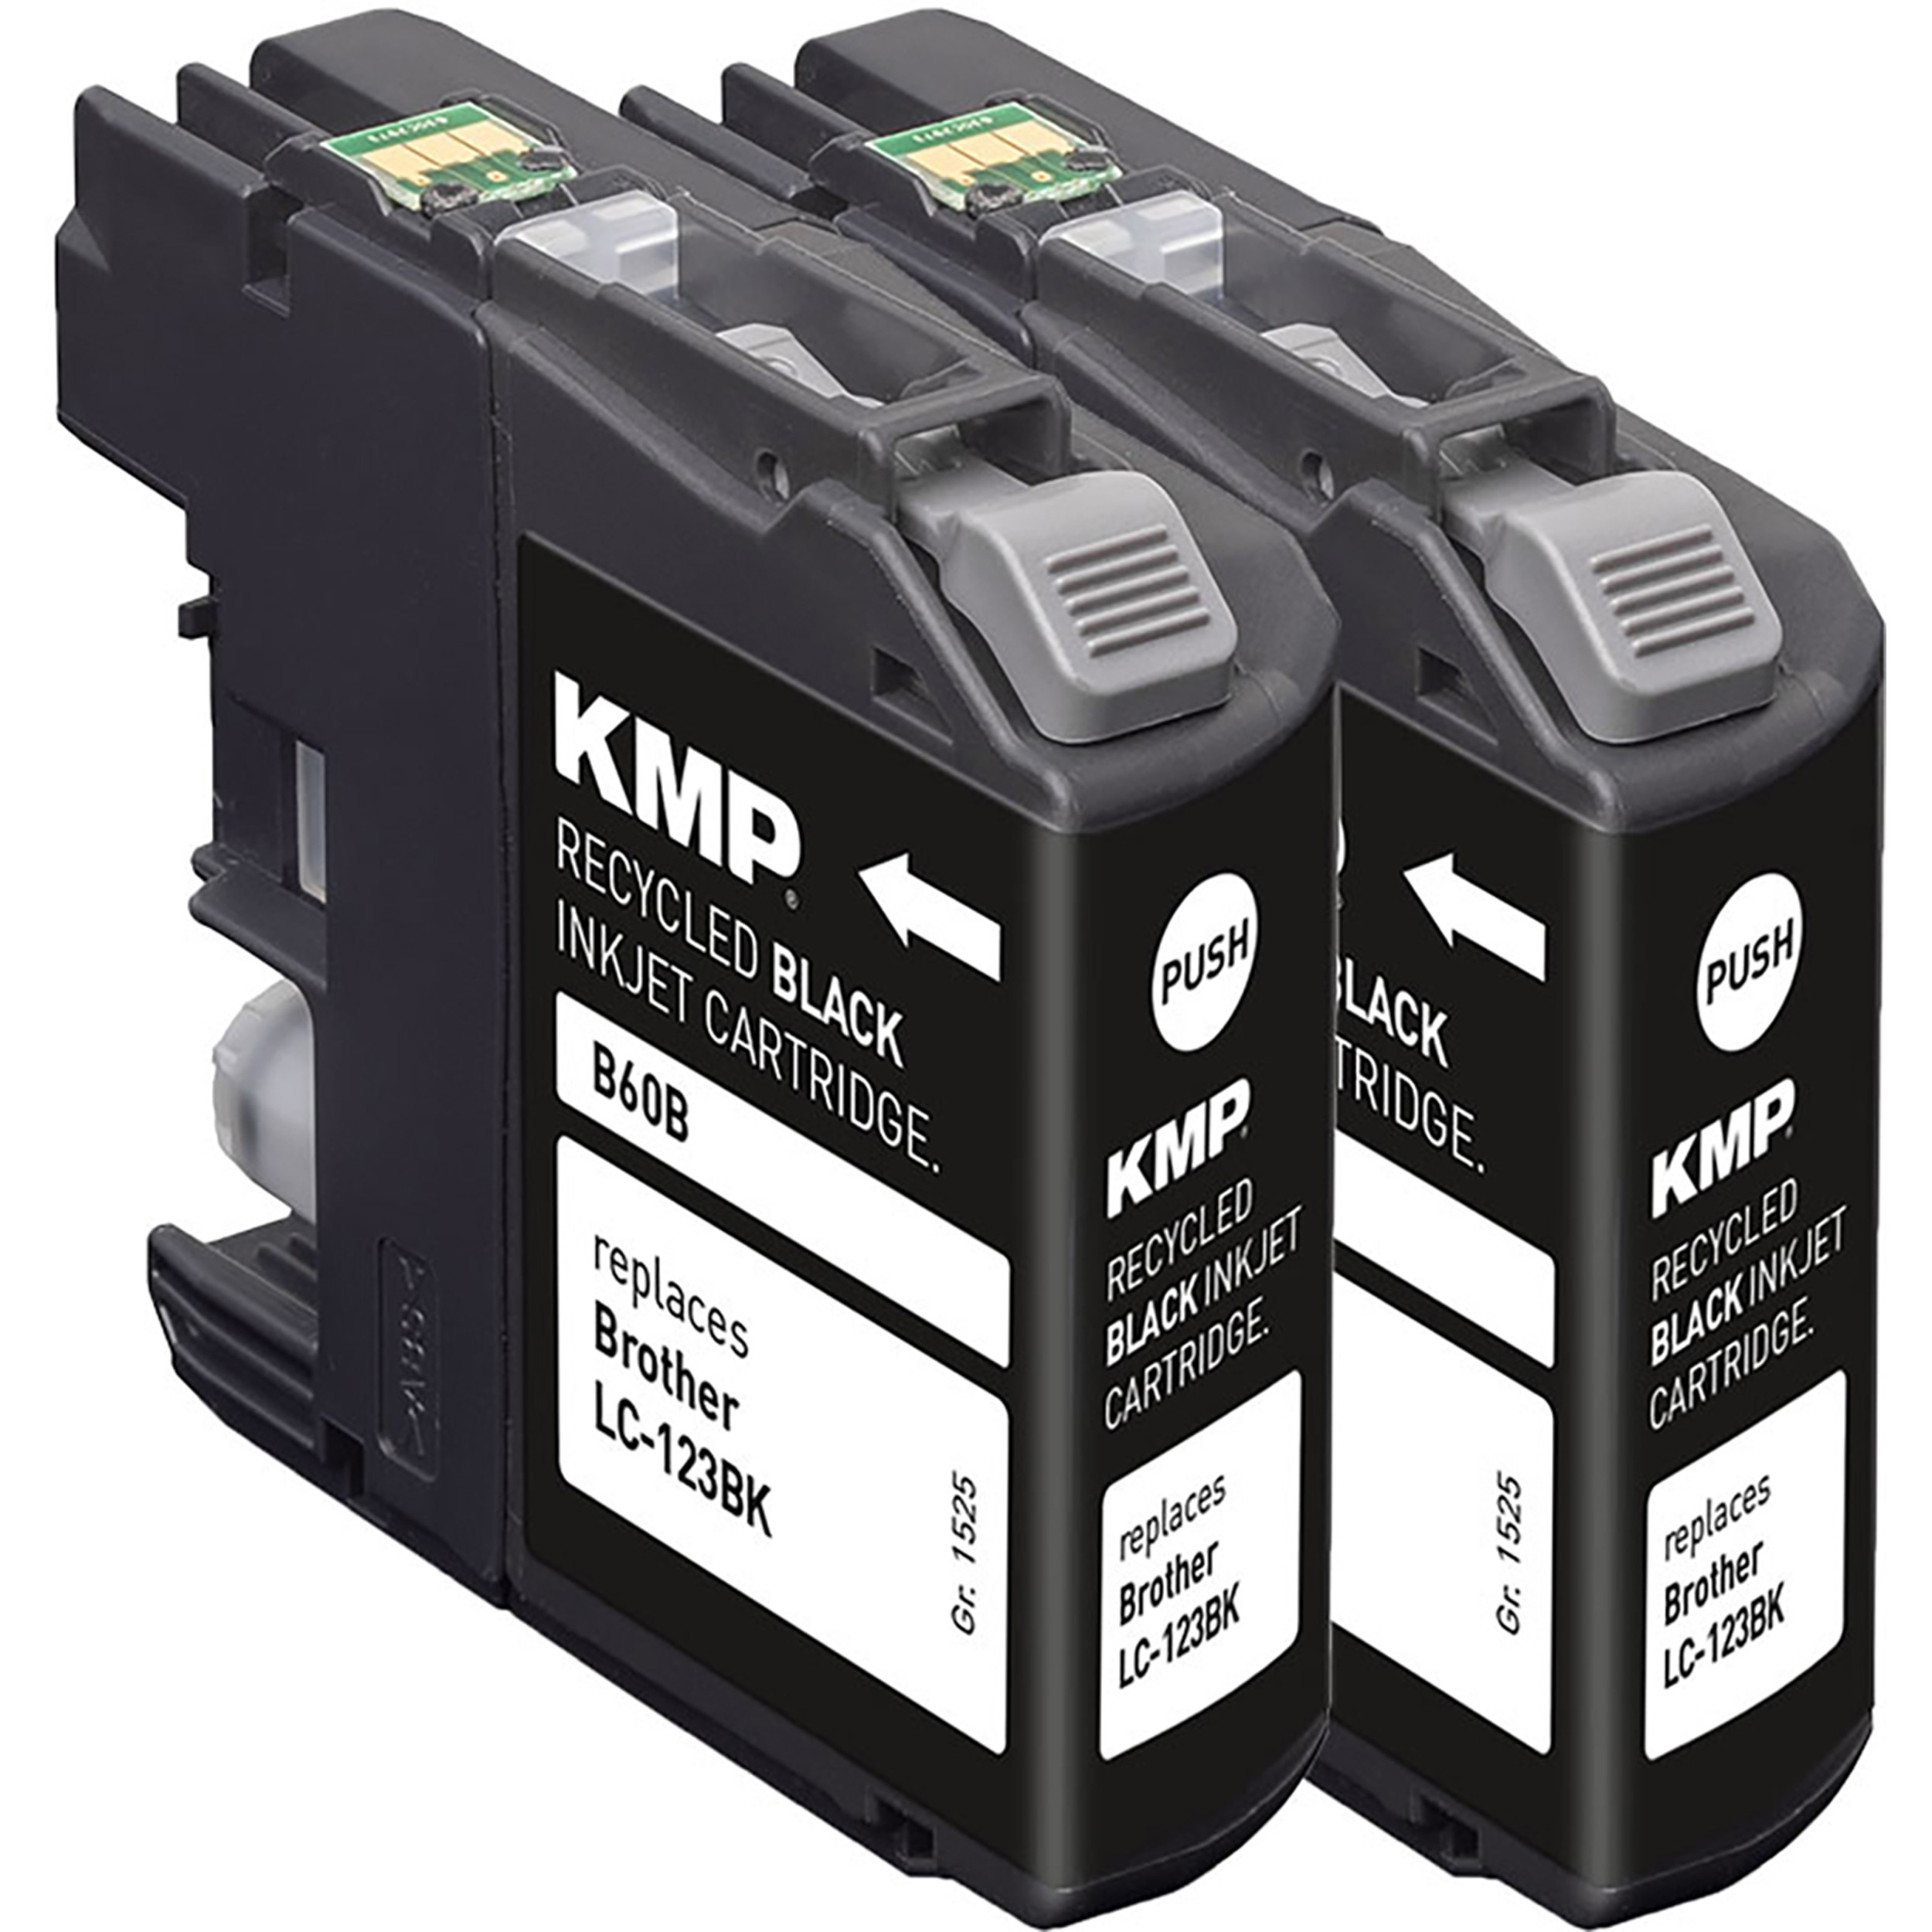 KMP Tintenpatrone für Brother LC123BK (LC123BK) Cartridge Black Doublepack Black, Ink schwarz